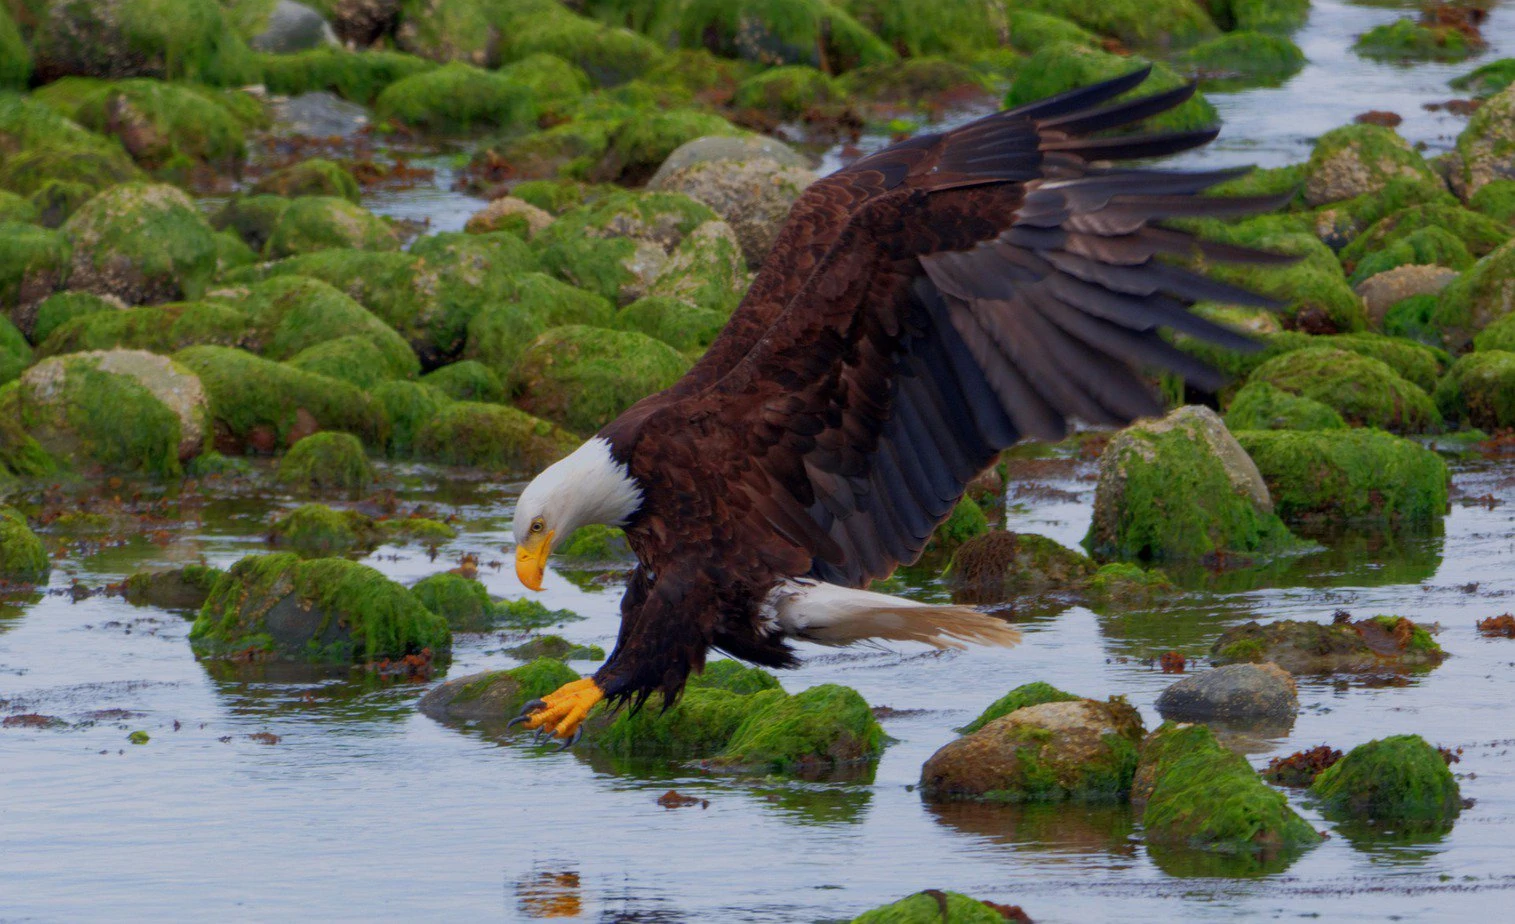 Bald Eagle prey